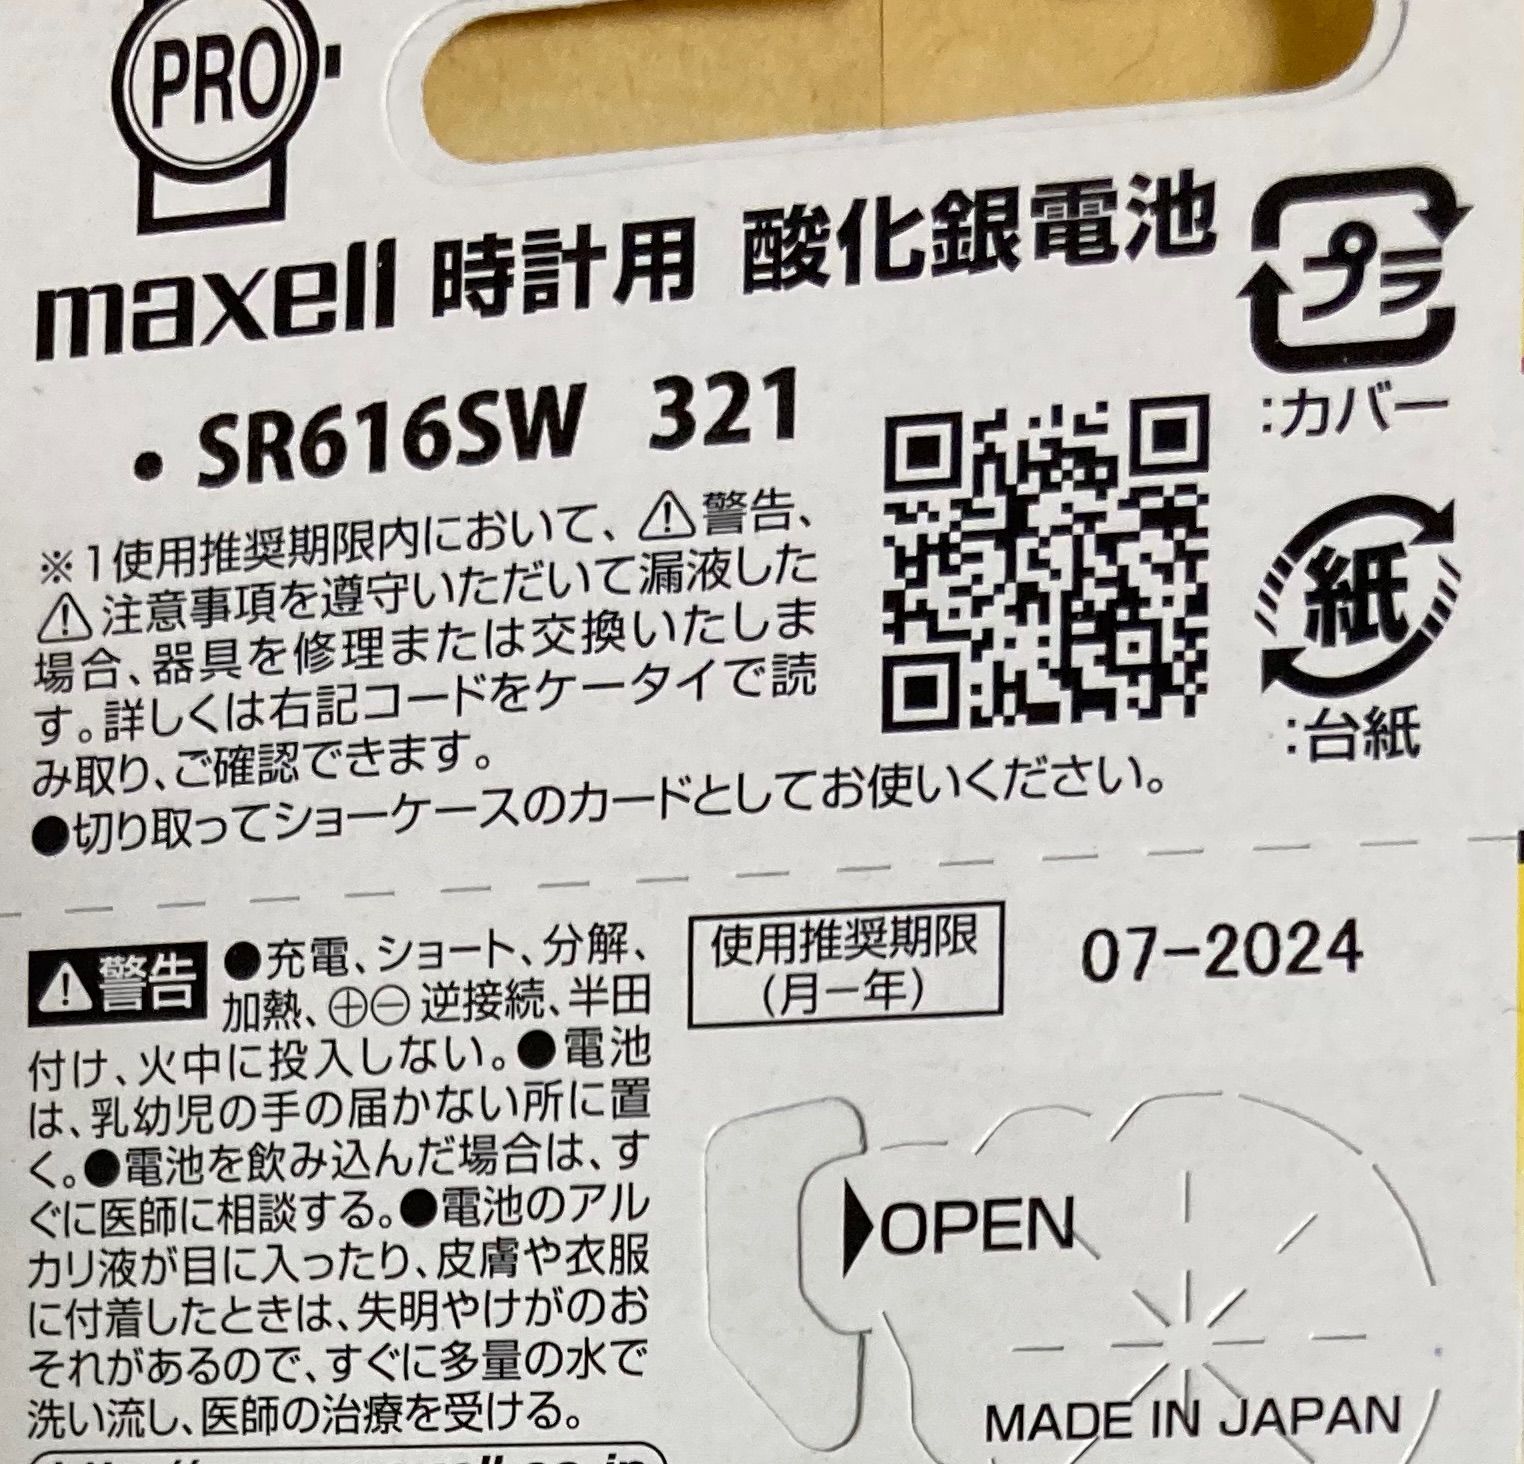 日本仕様 maxell SR916SW時計用酸化銀電池 ボタン電池3個